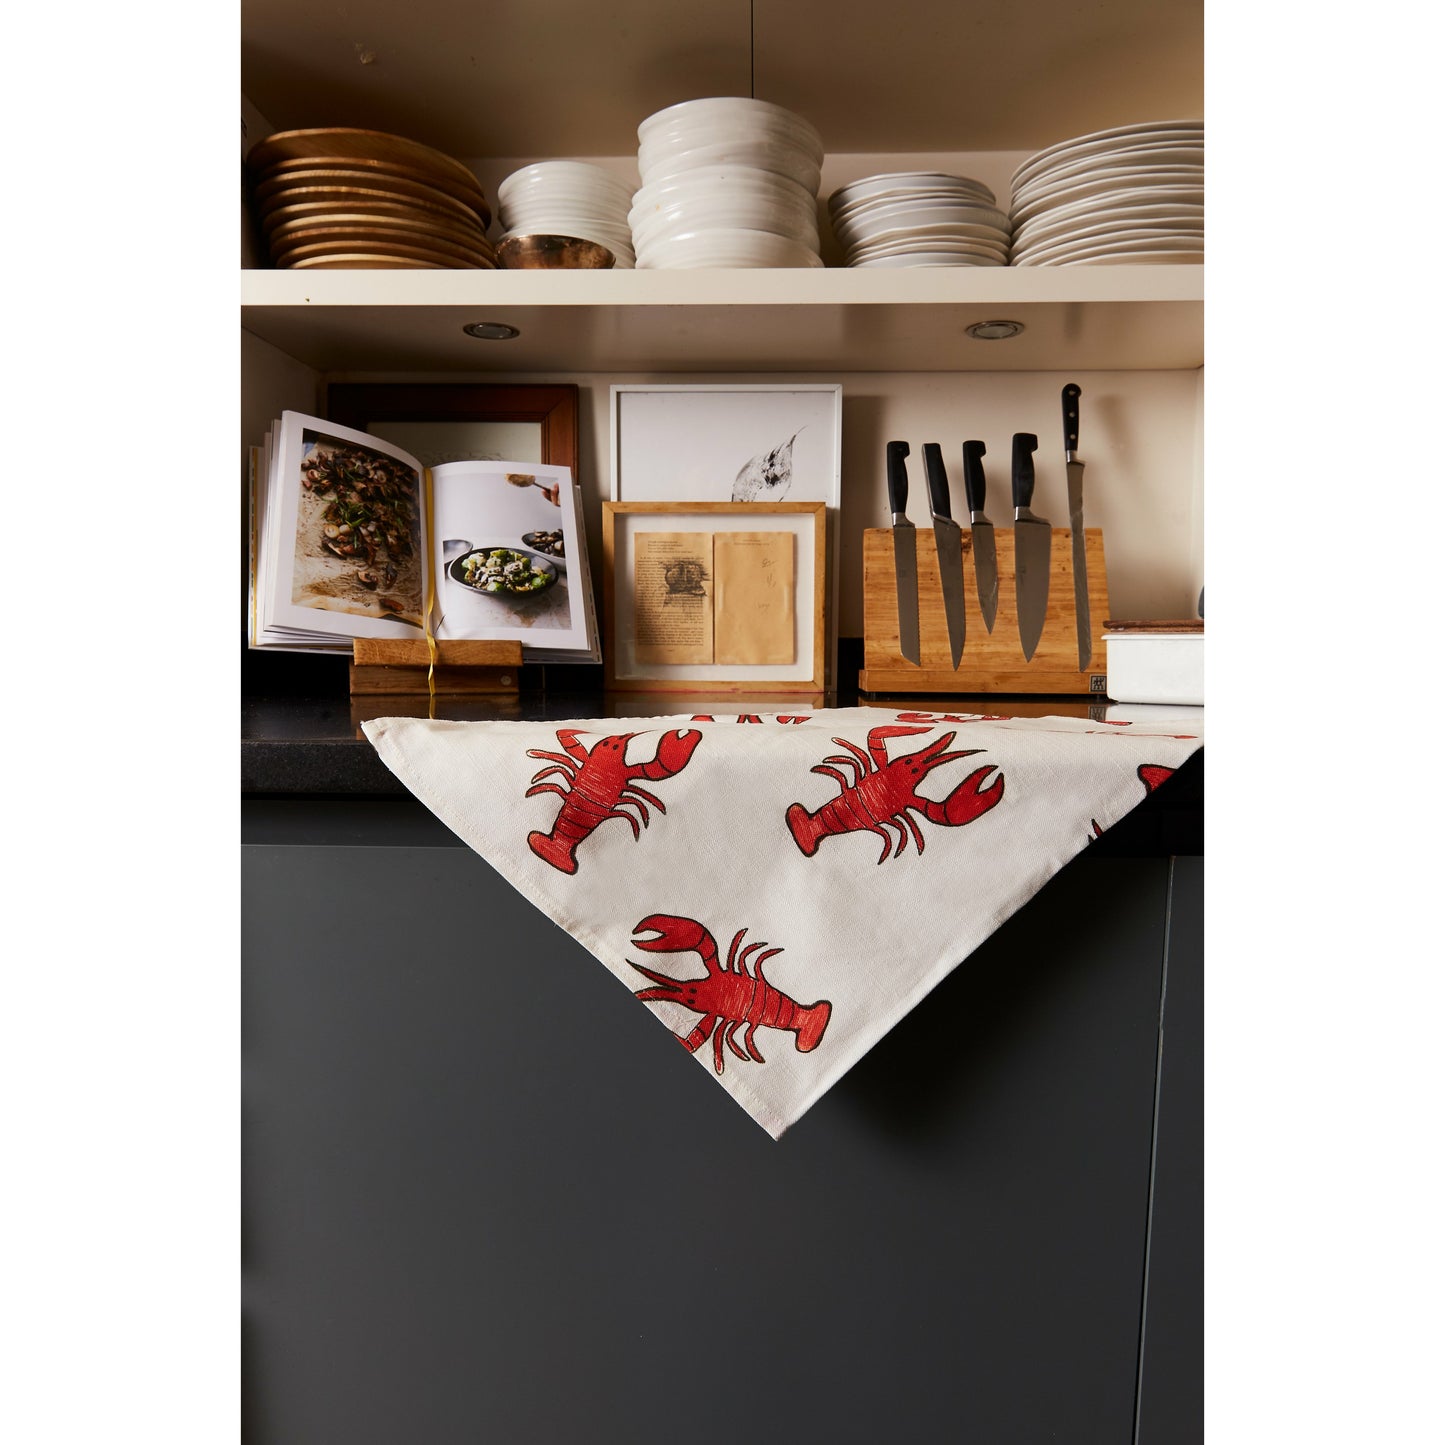 Lobster Tea Towel in the kitchen